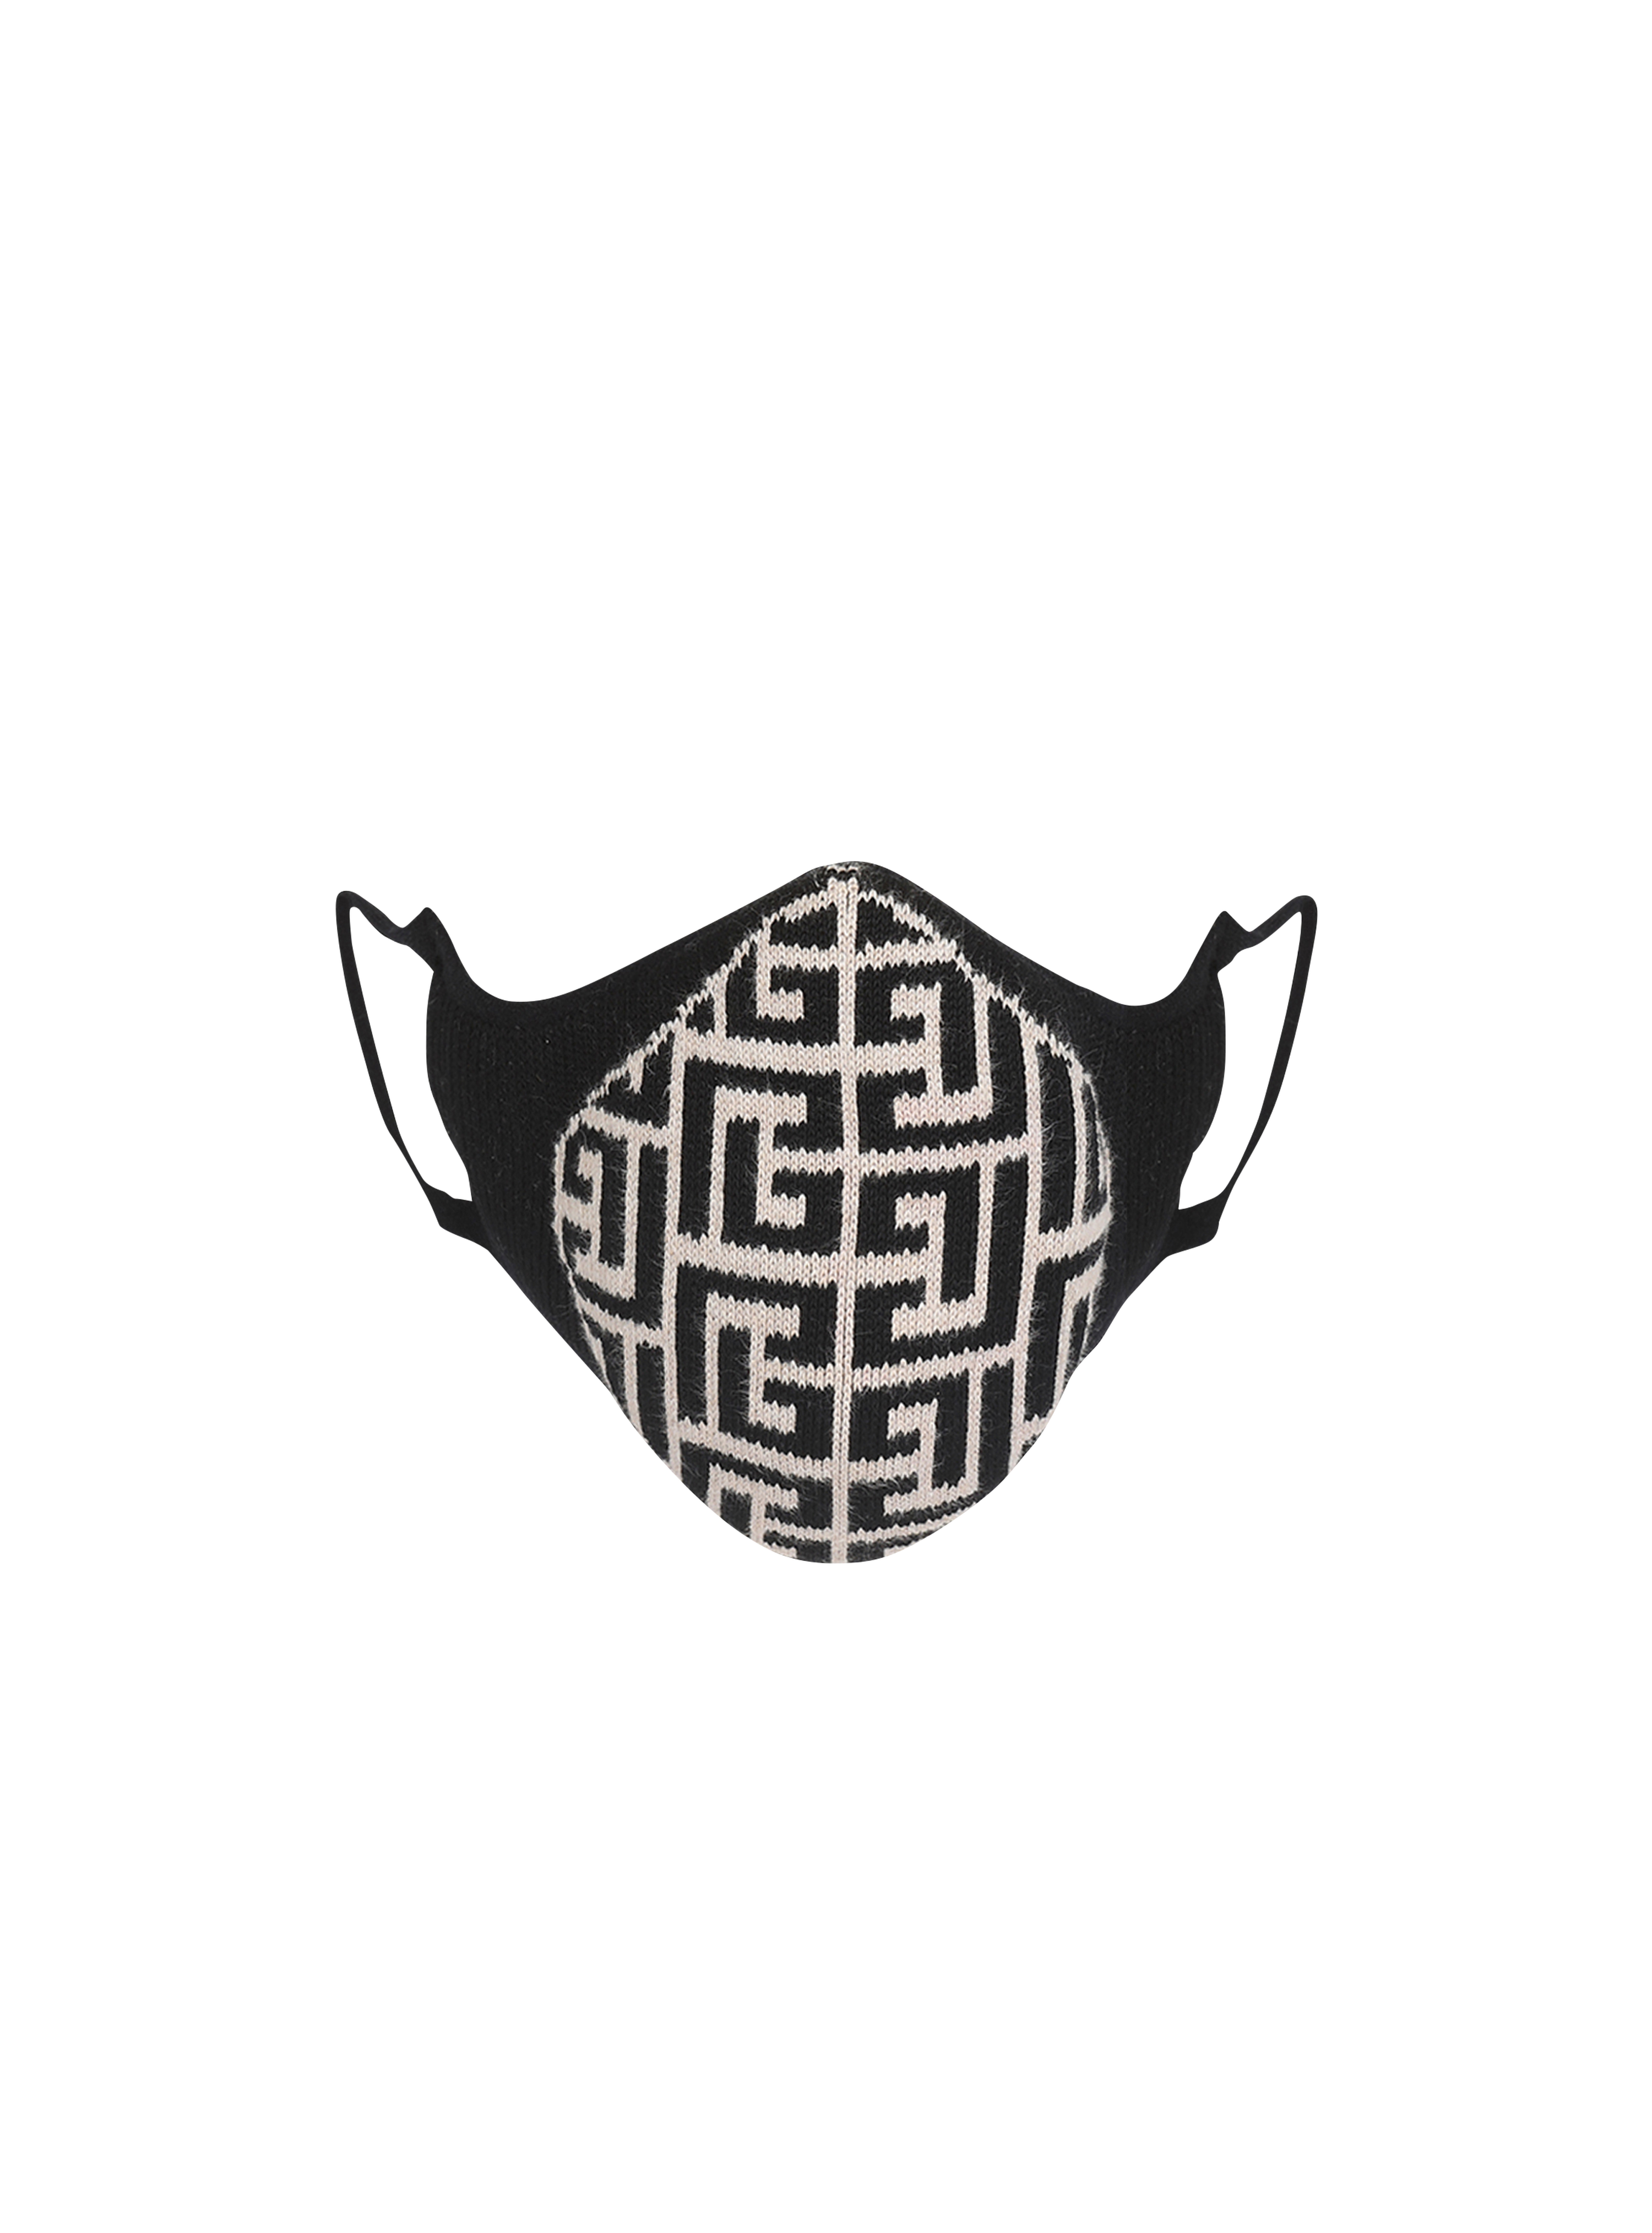 Cotton mask with Balmain monogram, black